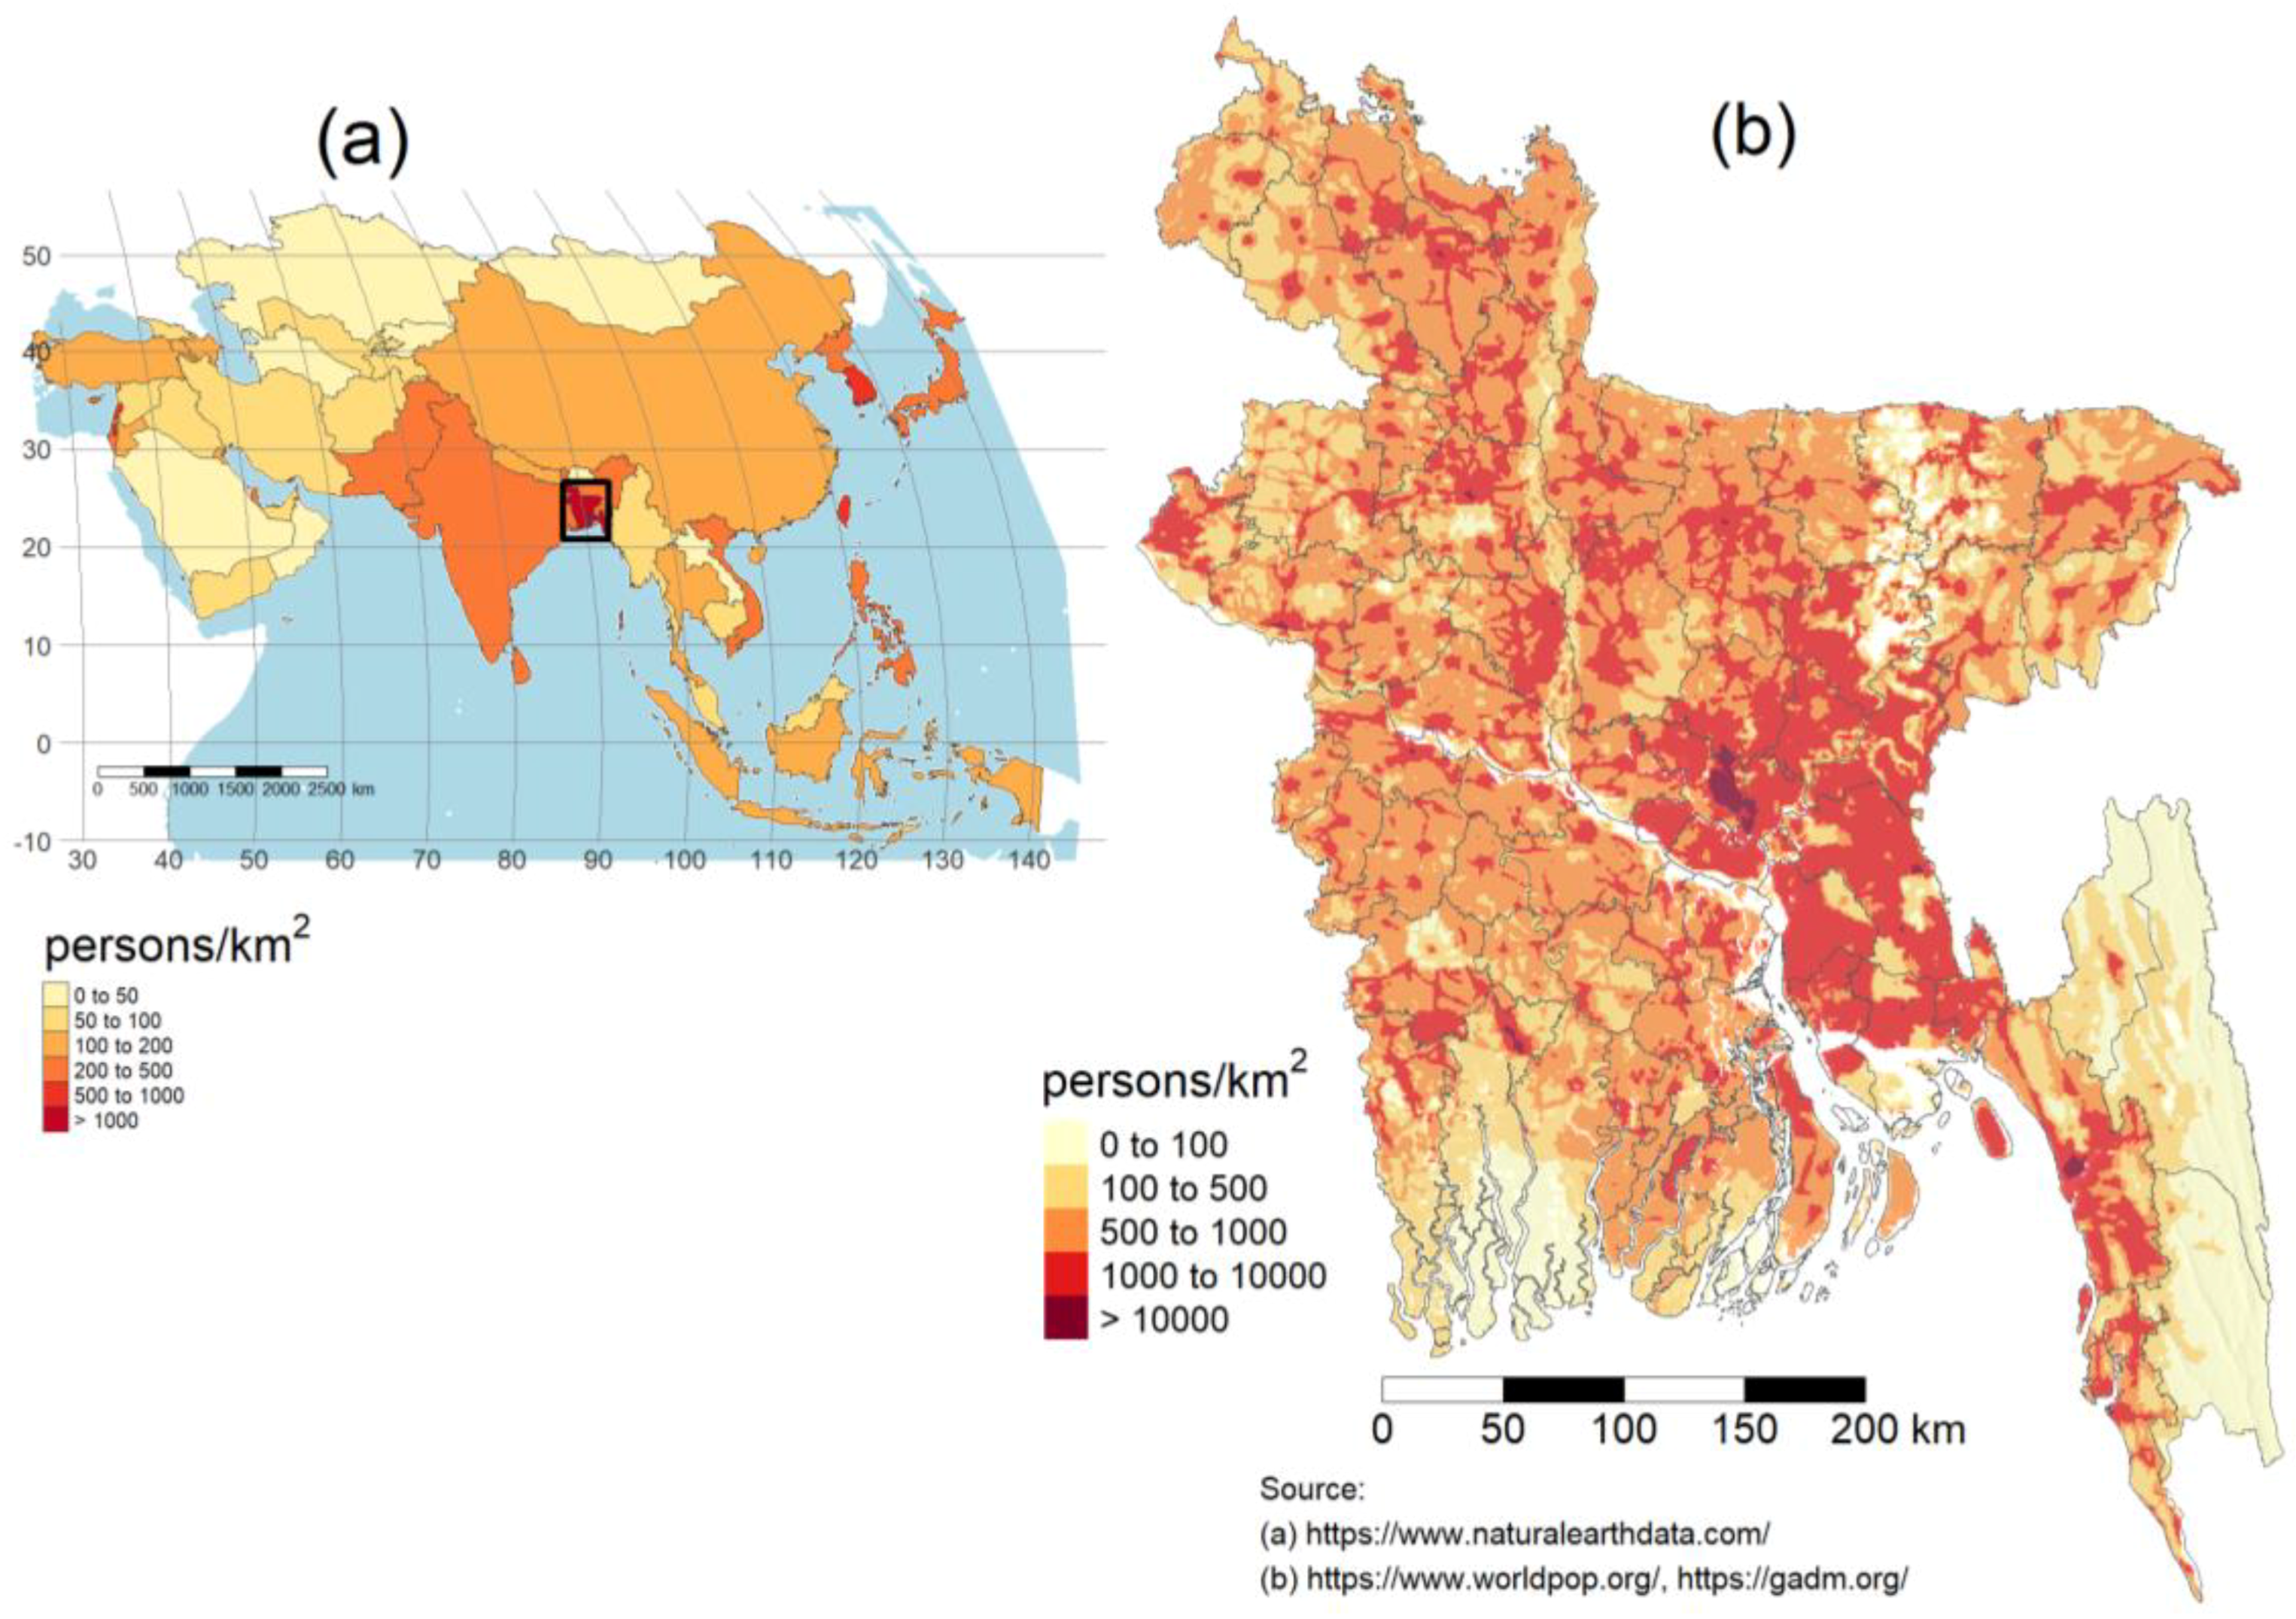 World Population Density Interactive Map Citygeographics Urban Form Images